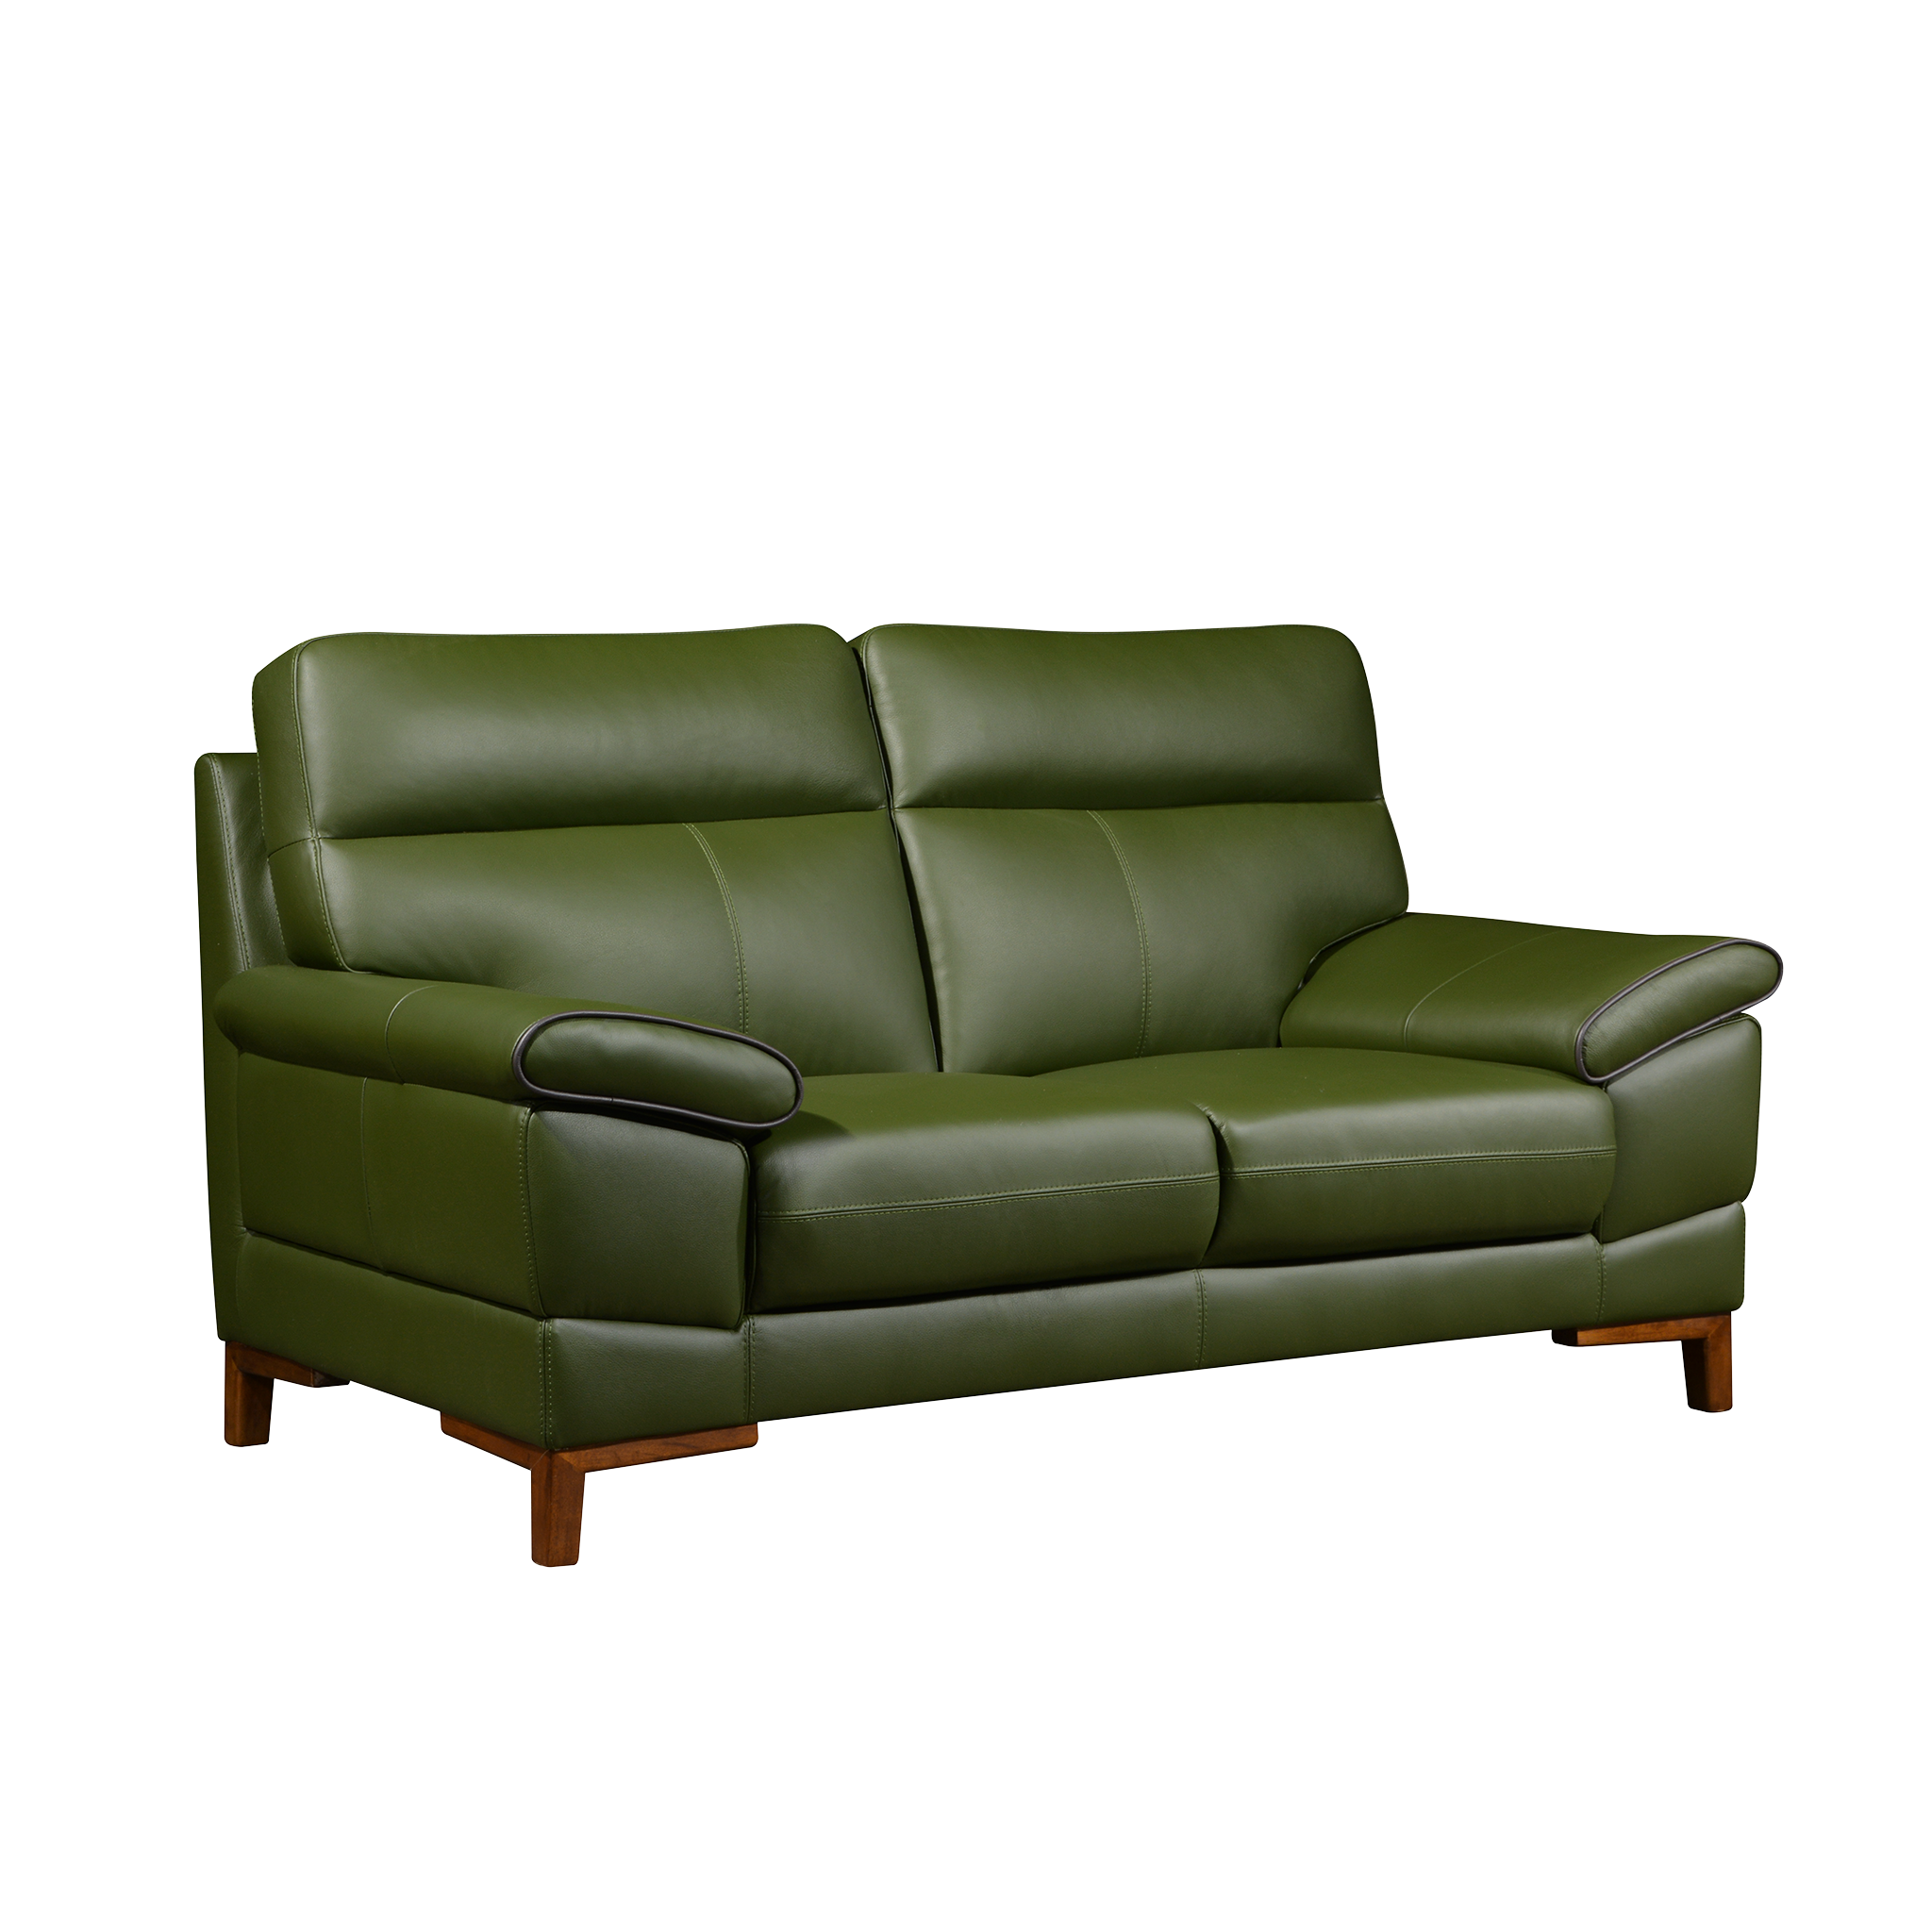 2 Seater Sofa In Full Leather Ravenna